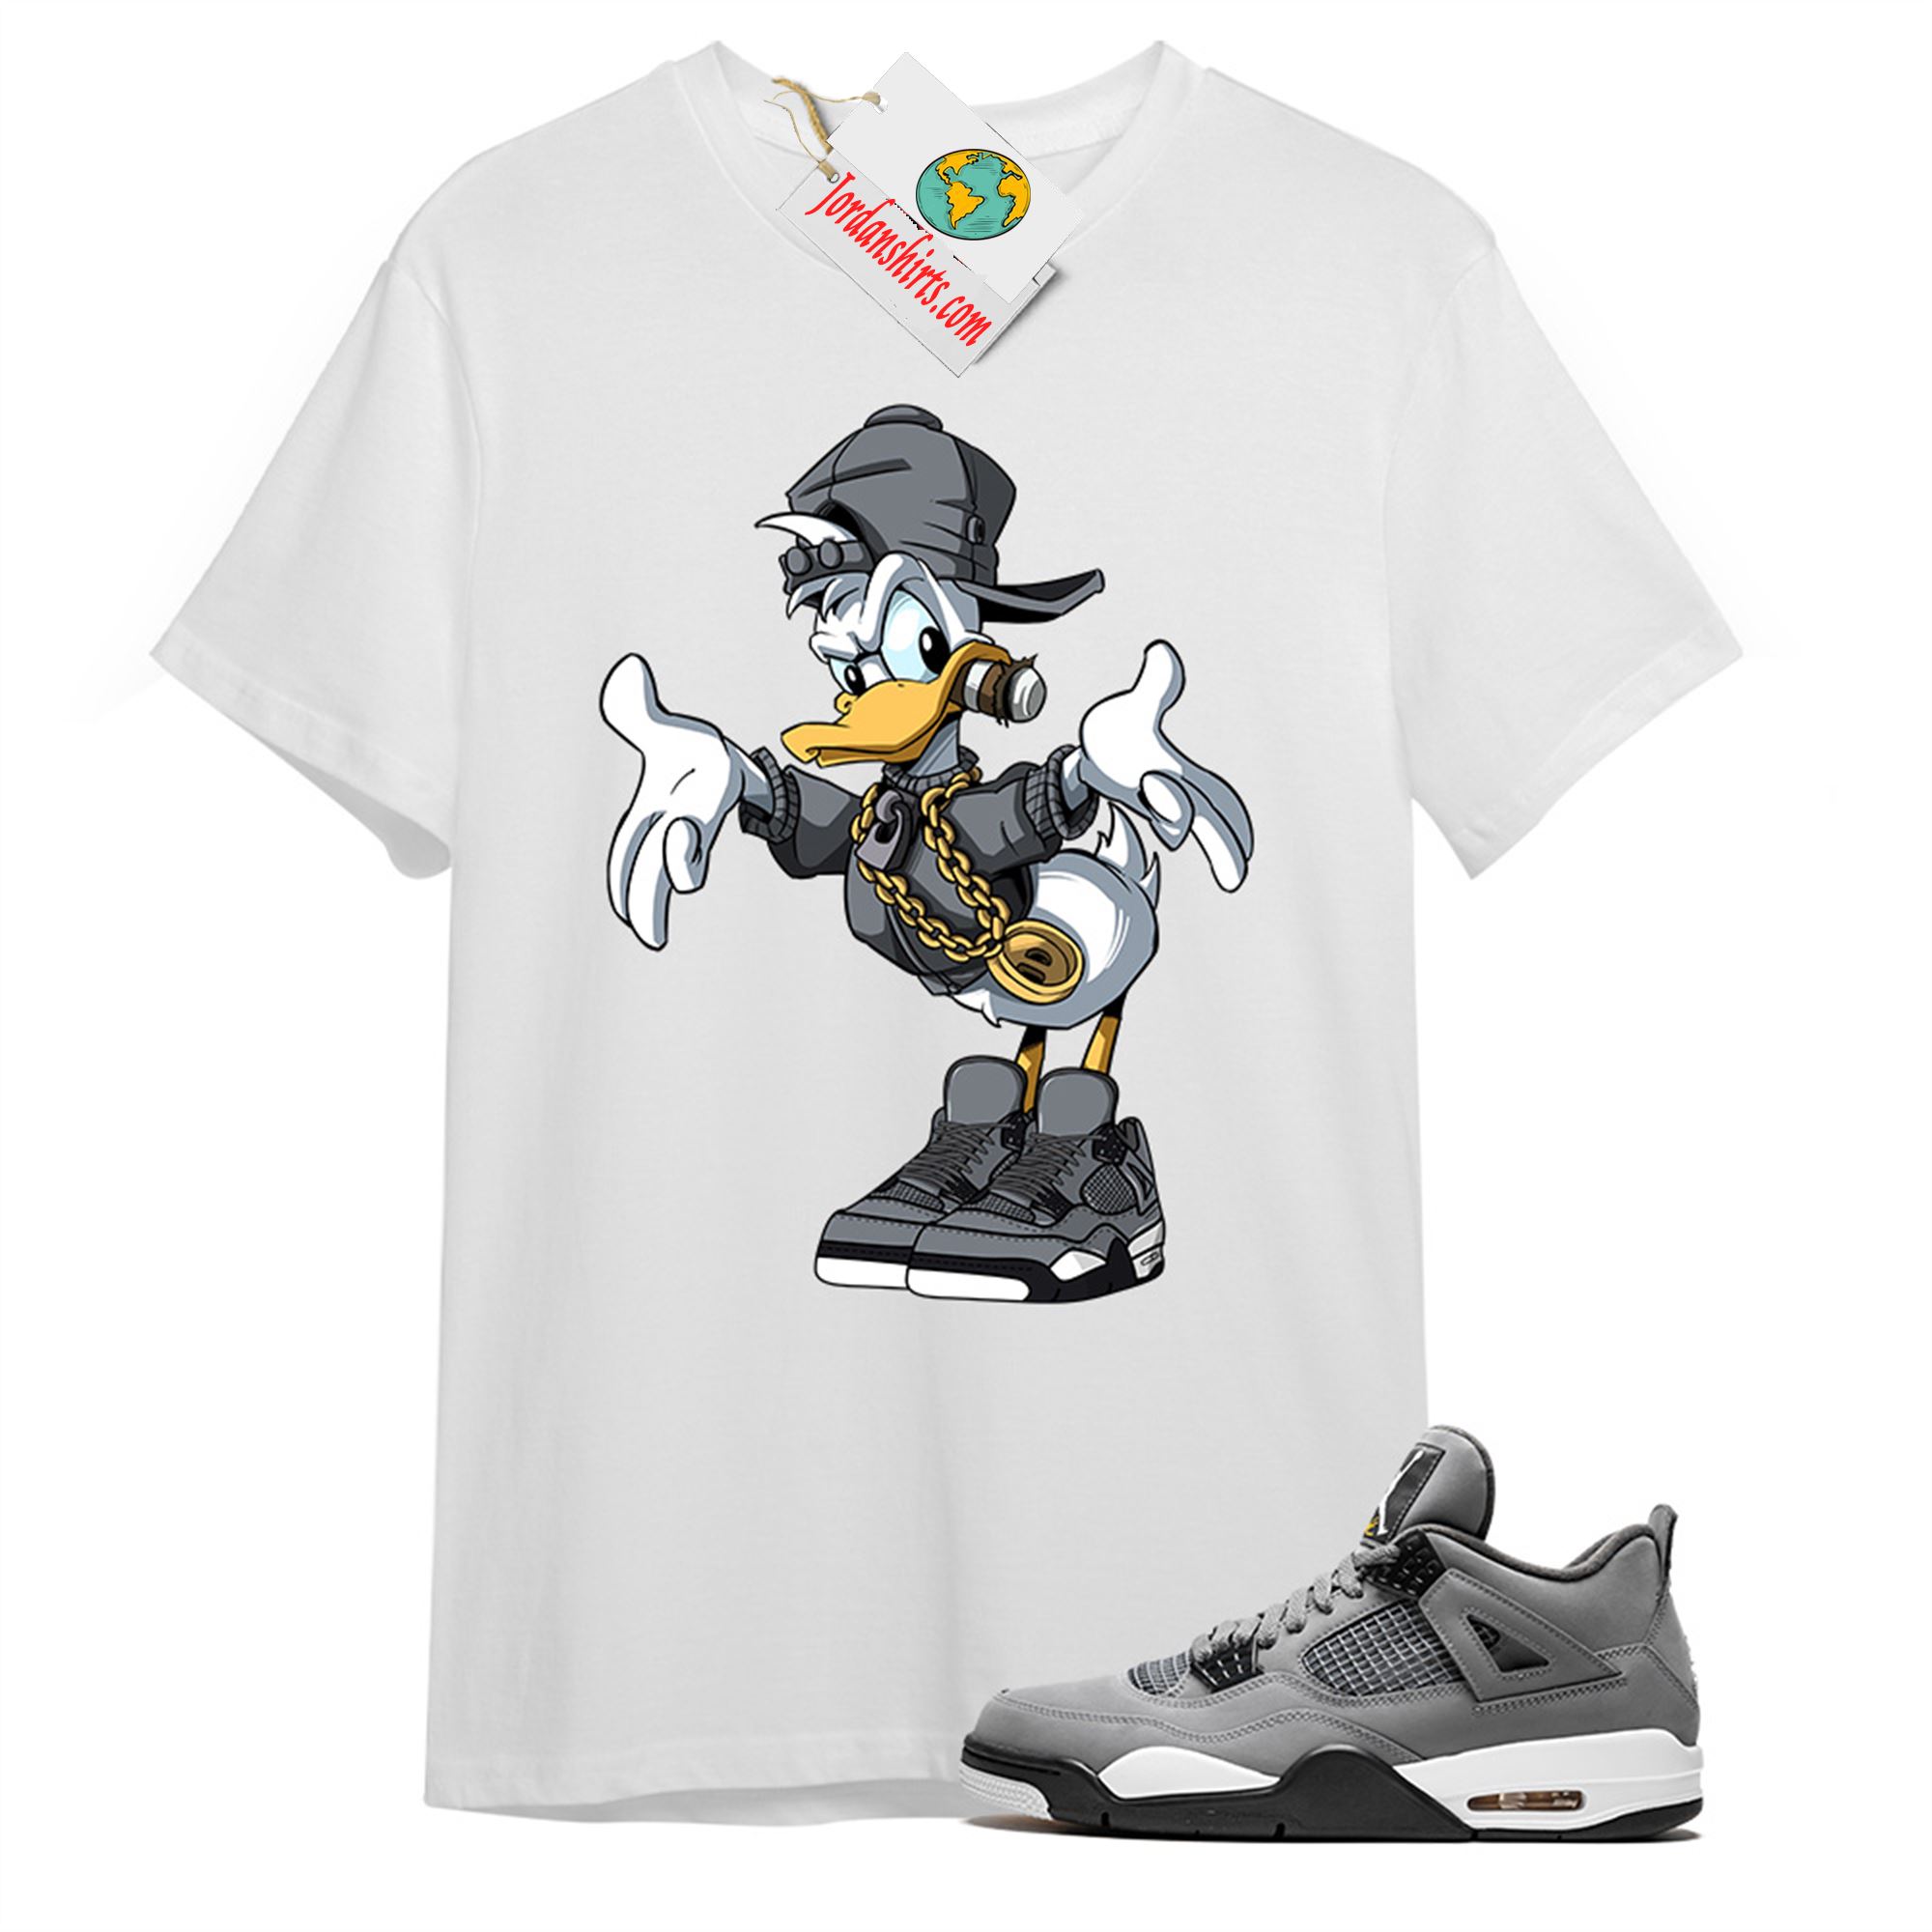 Jordan 4 Shirt, Donald Duck White T-shirt Air Jordan 4 Cool Grey 4s Full Size Up To 5xl